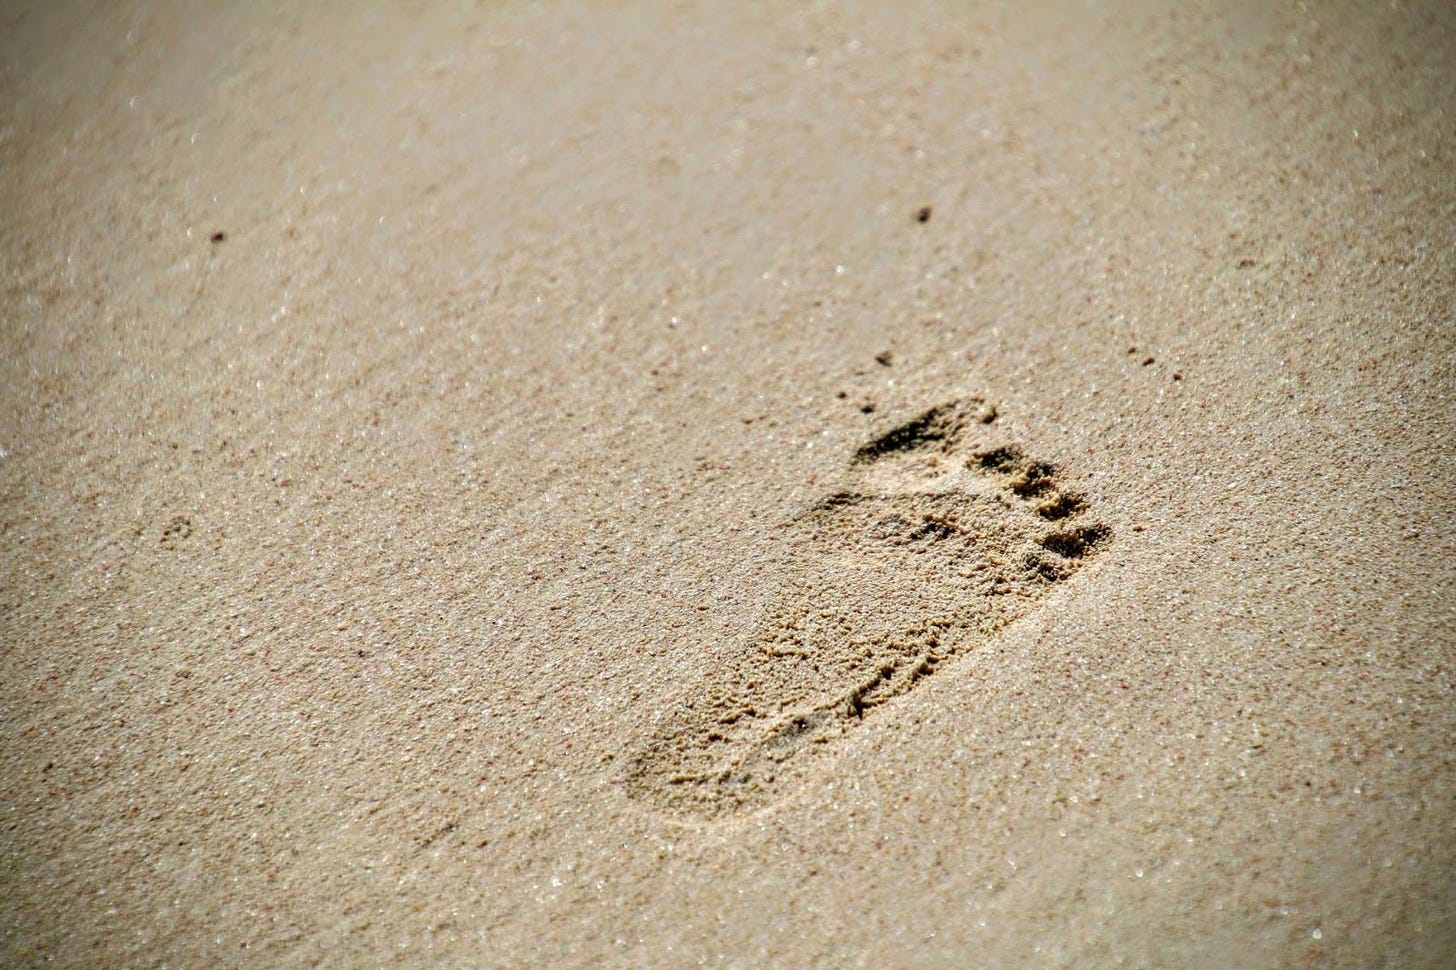 single footprint in sand